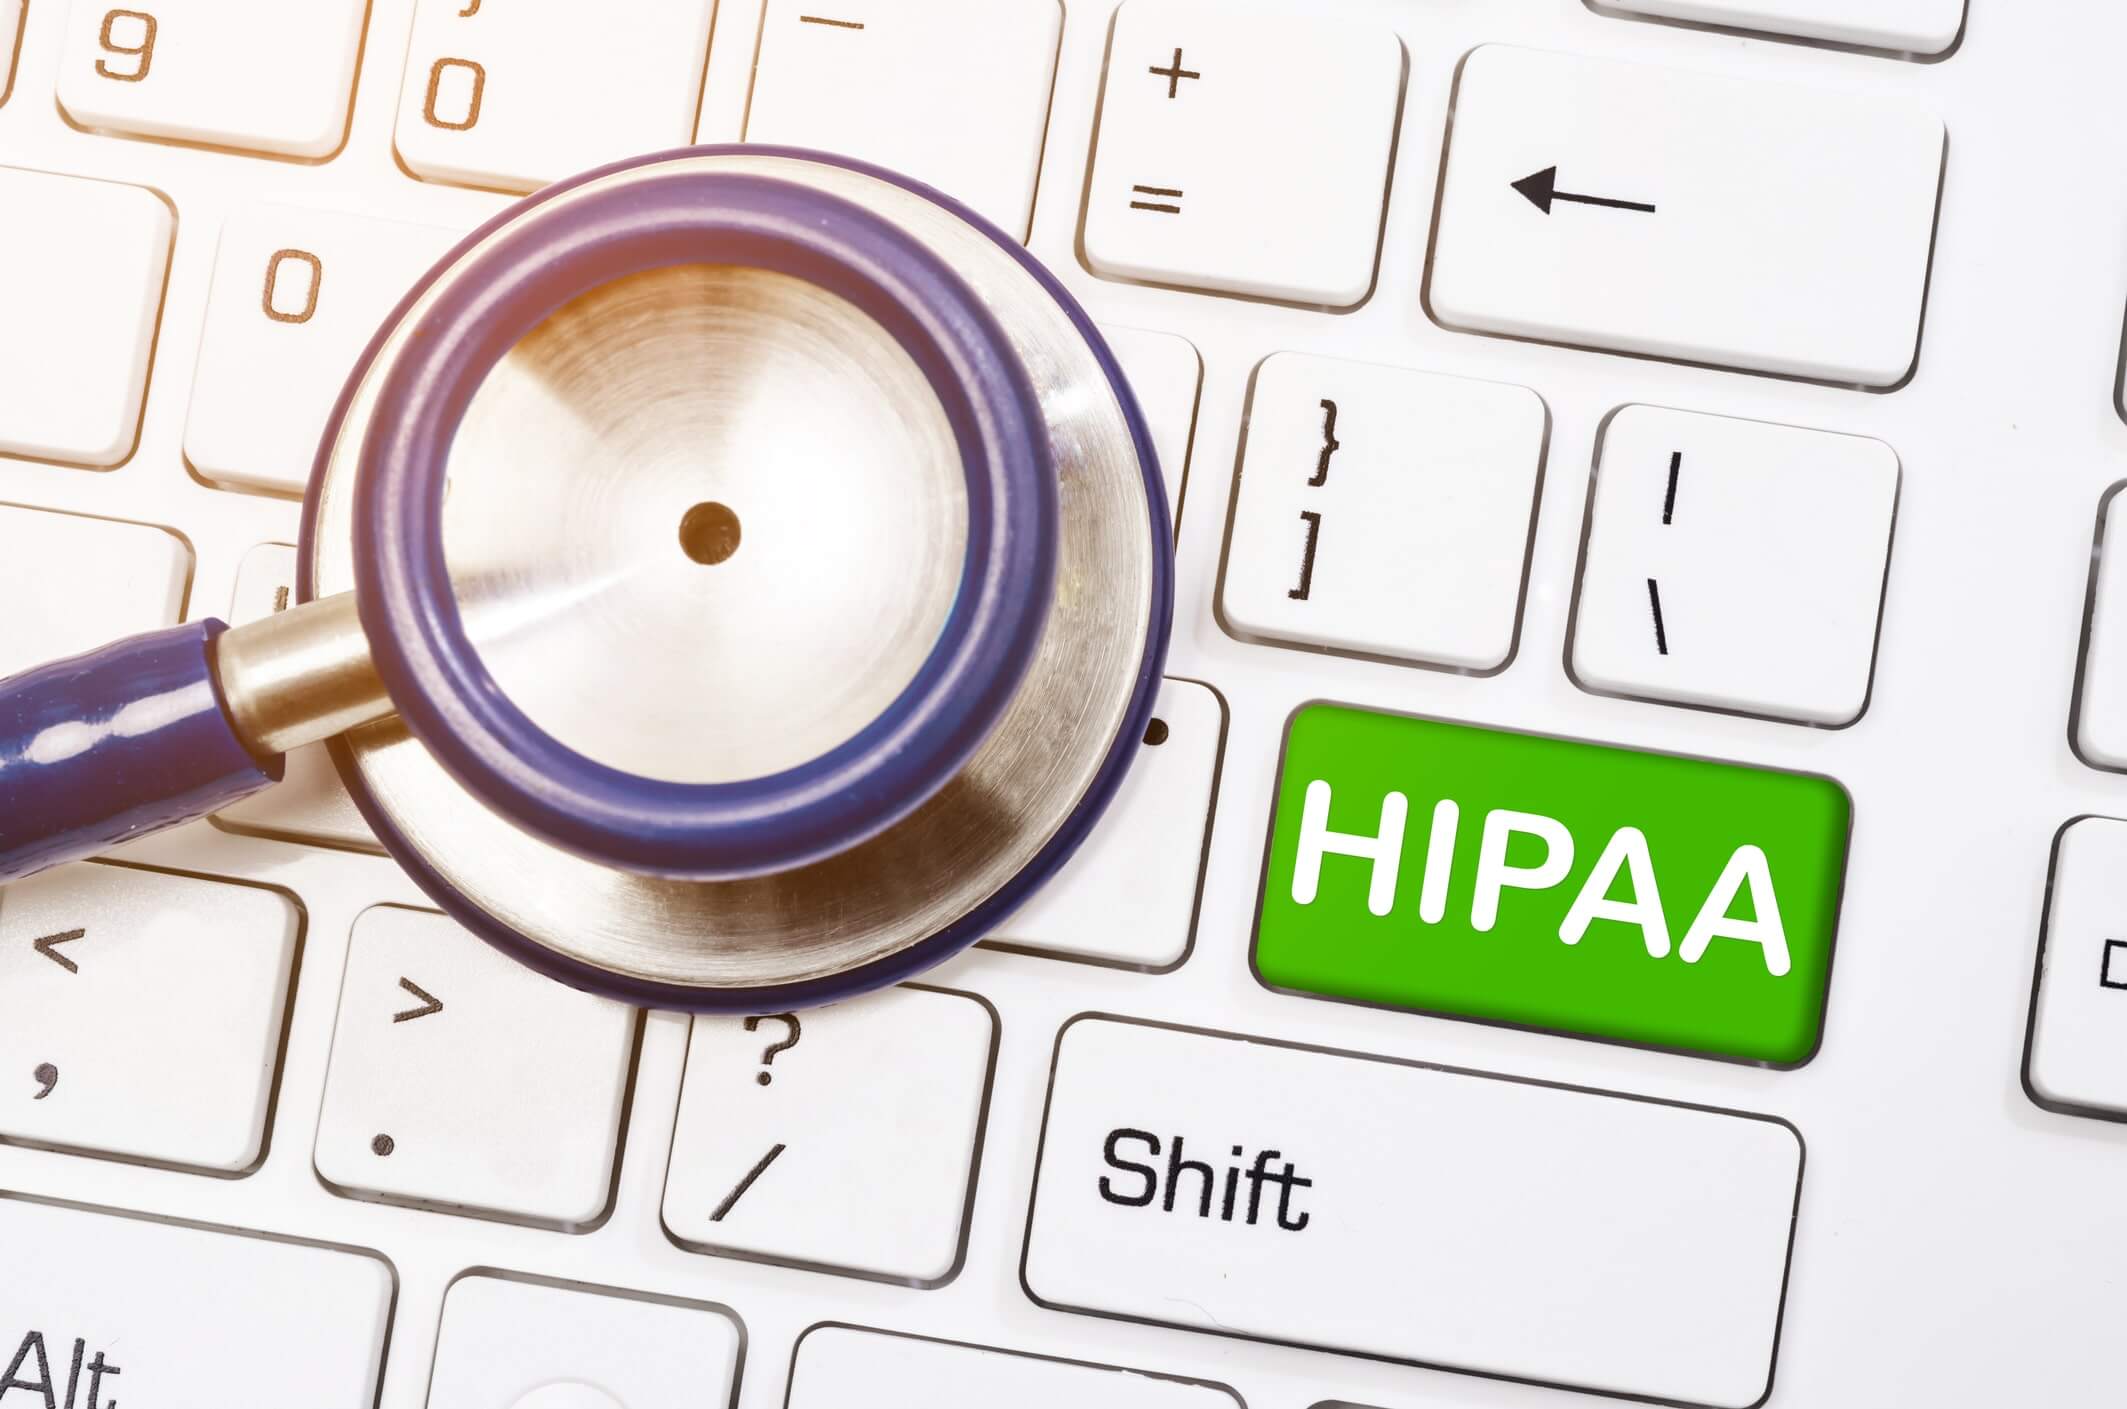 How HIPAA can help improve healthcare data security